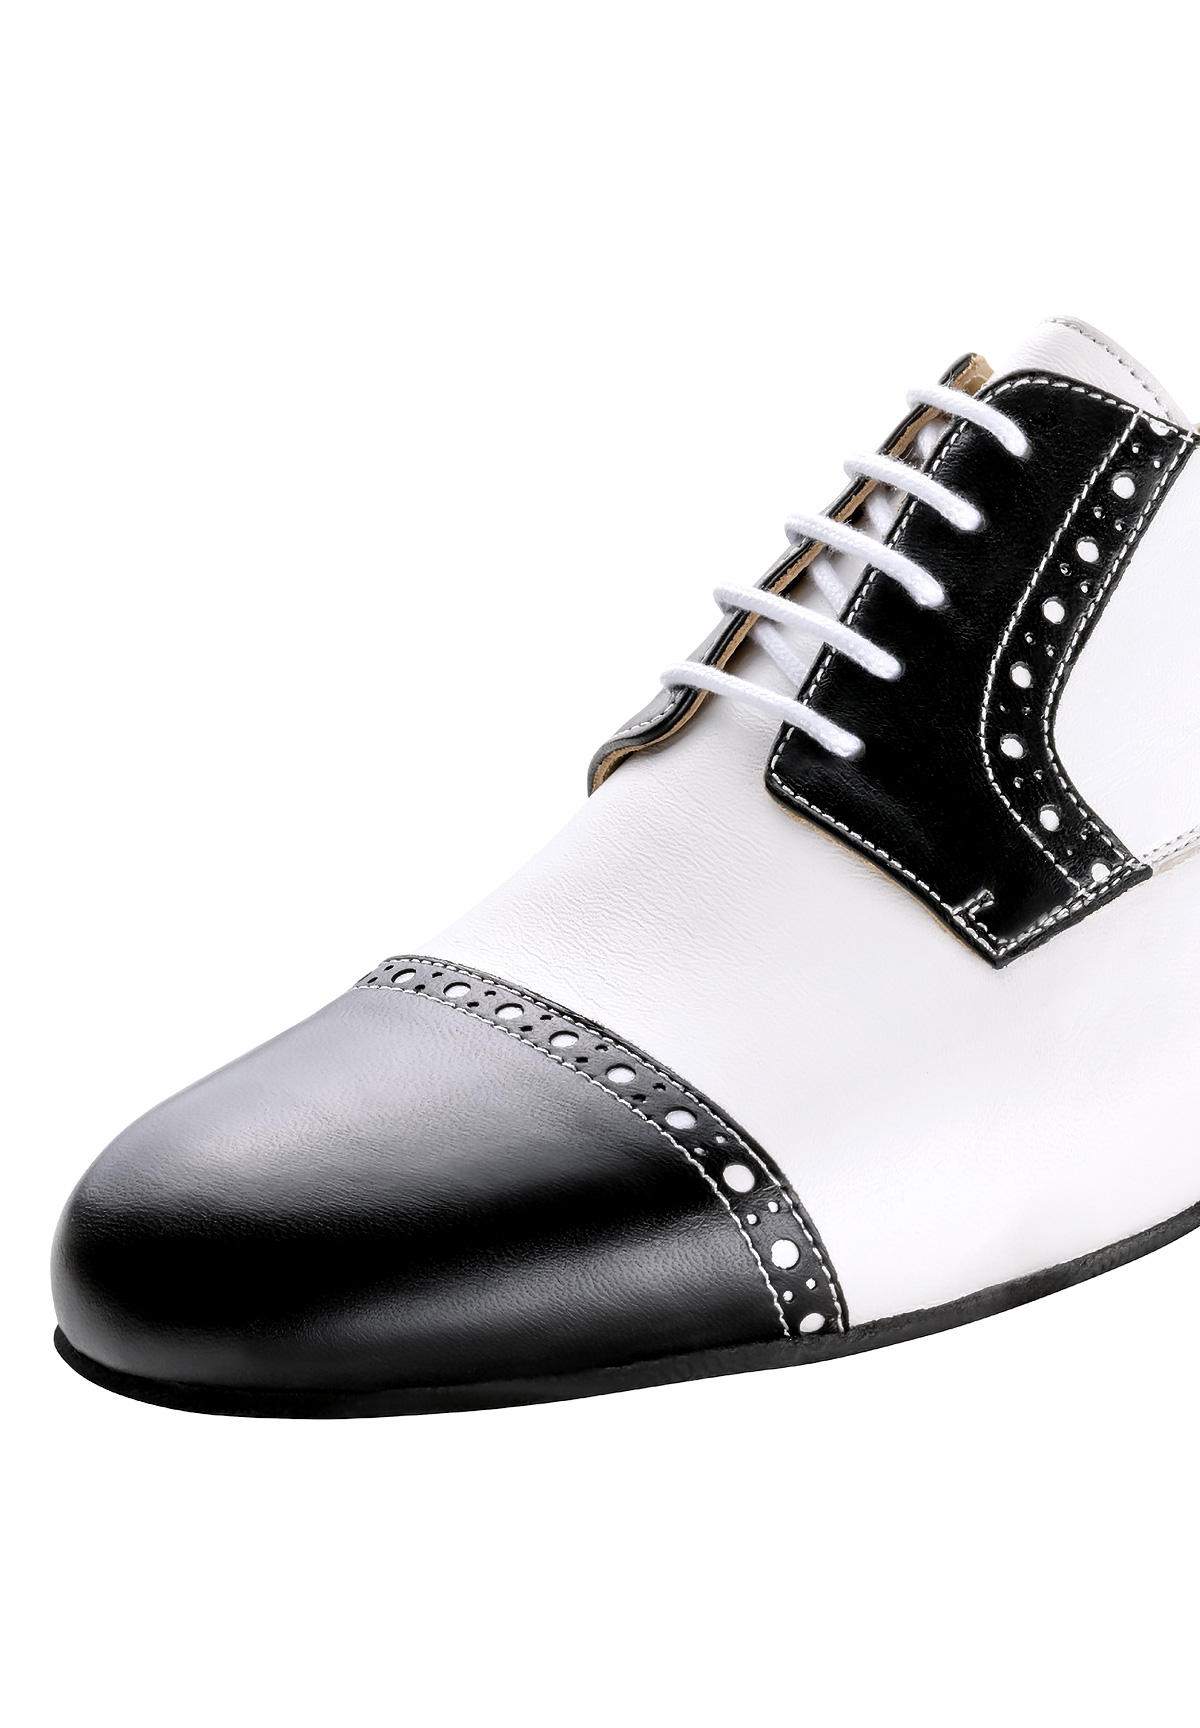 Werner Kern 28051 Mens Tango Shoes